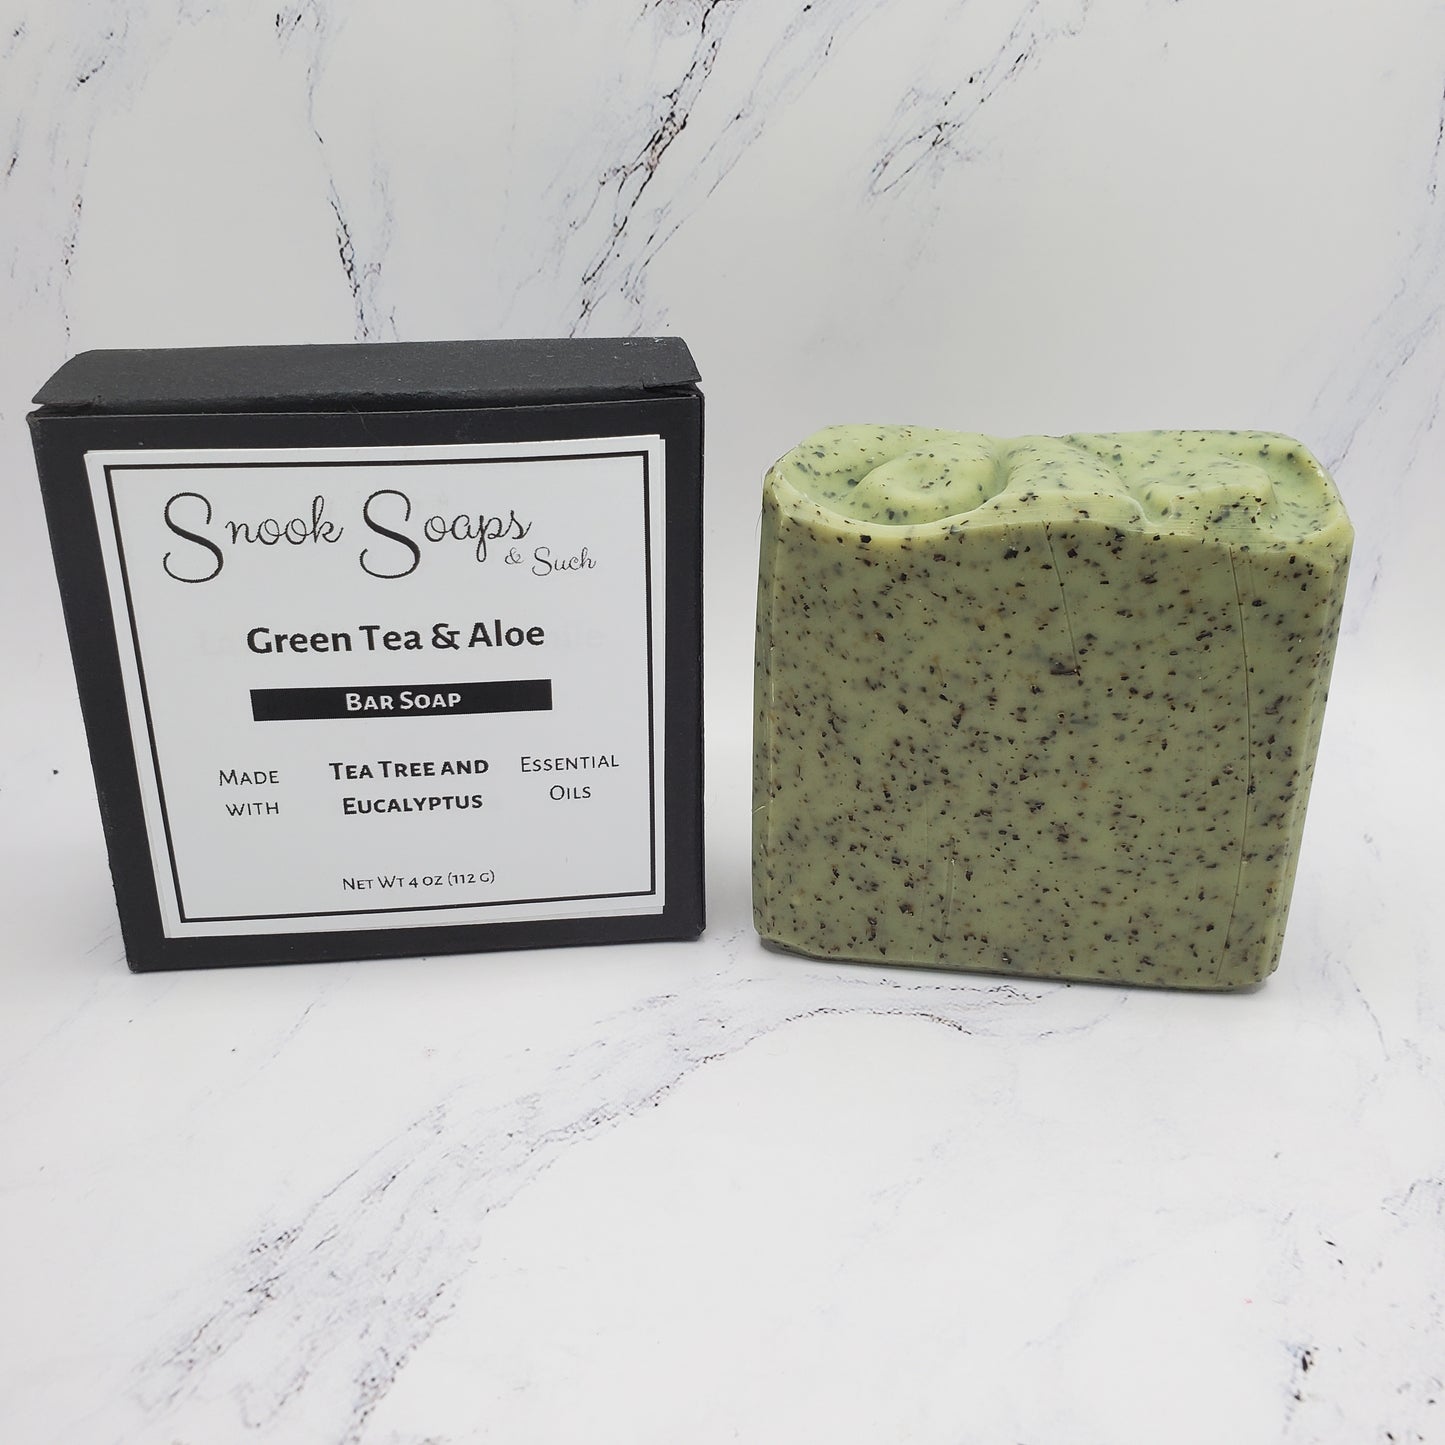 Green Tea & Aloe Bar Soap with Tea Tree and Eucalyptus Essential Oils